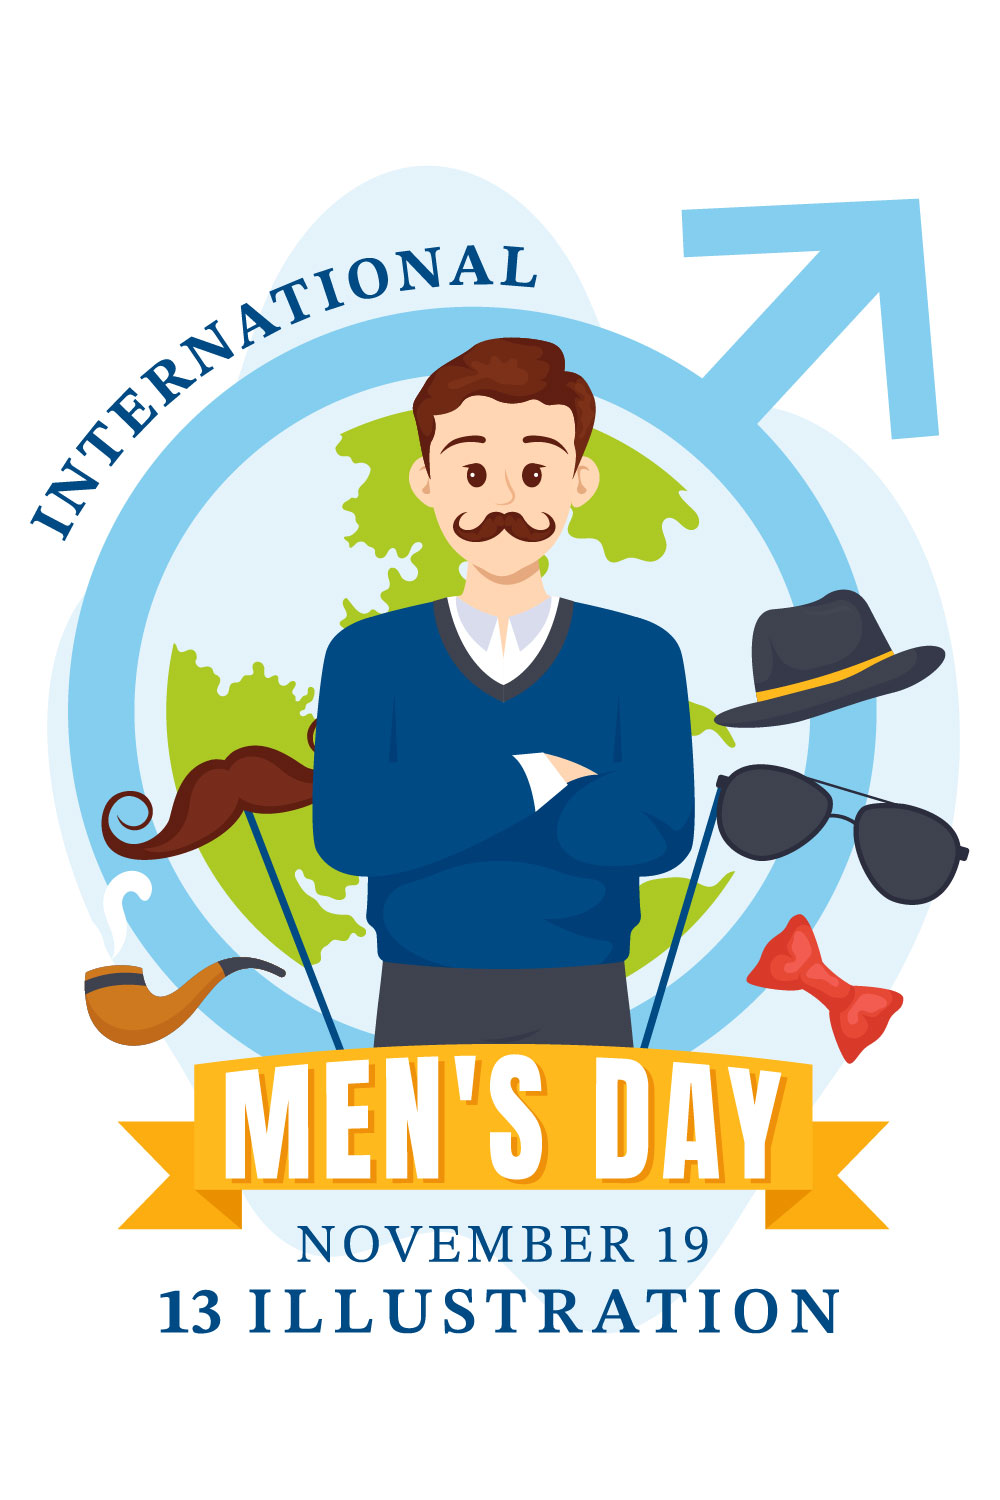 13 International Men's Day Illustration pinterest preview image.